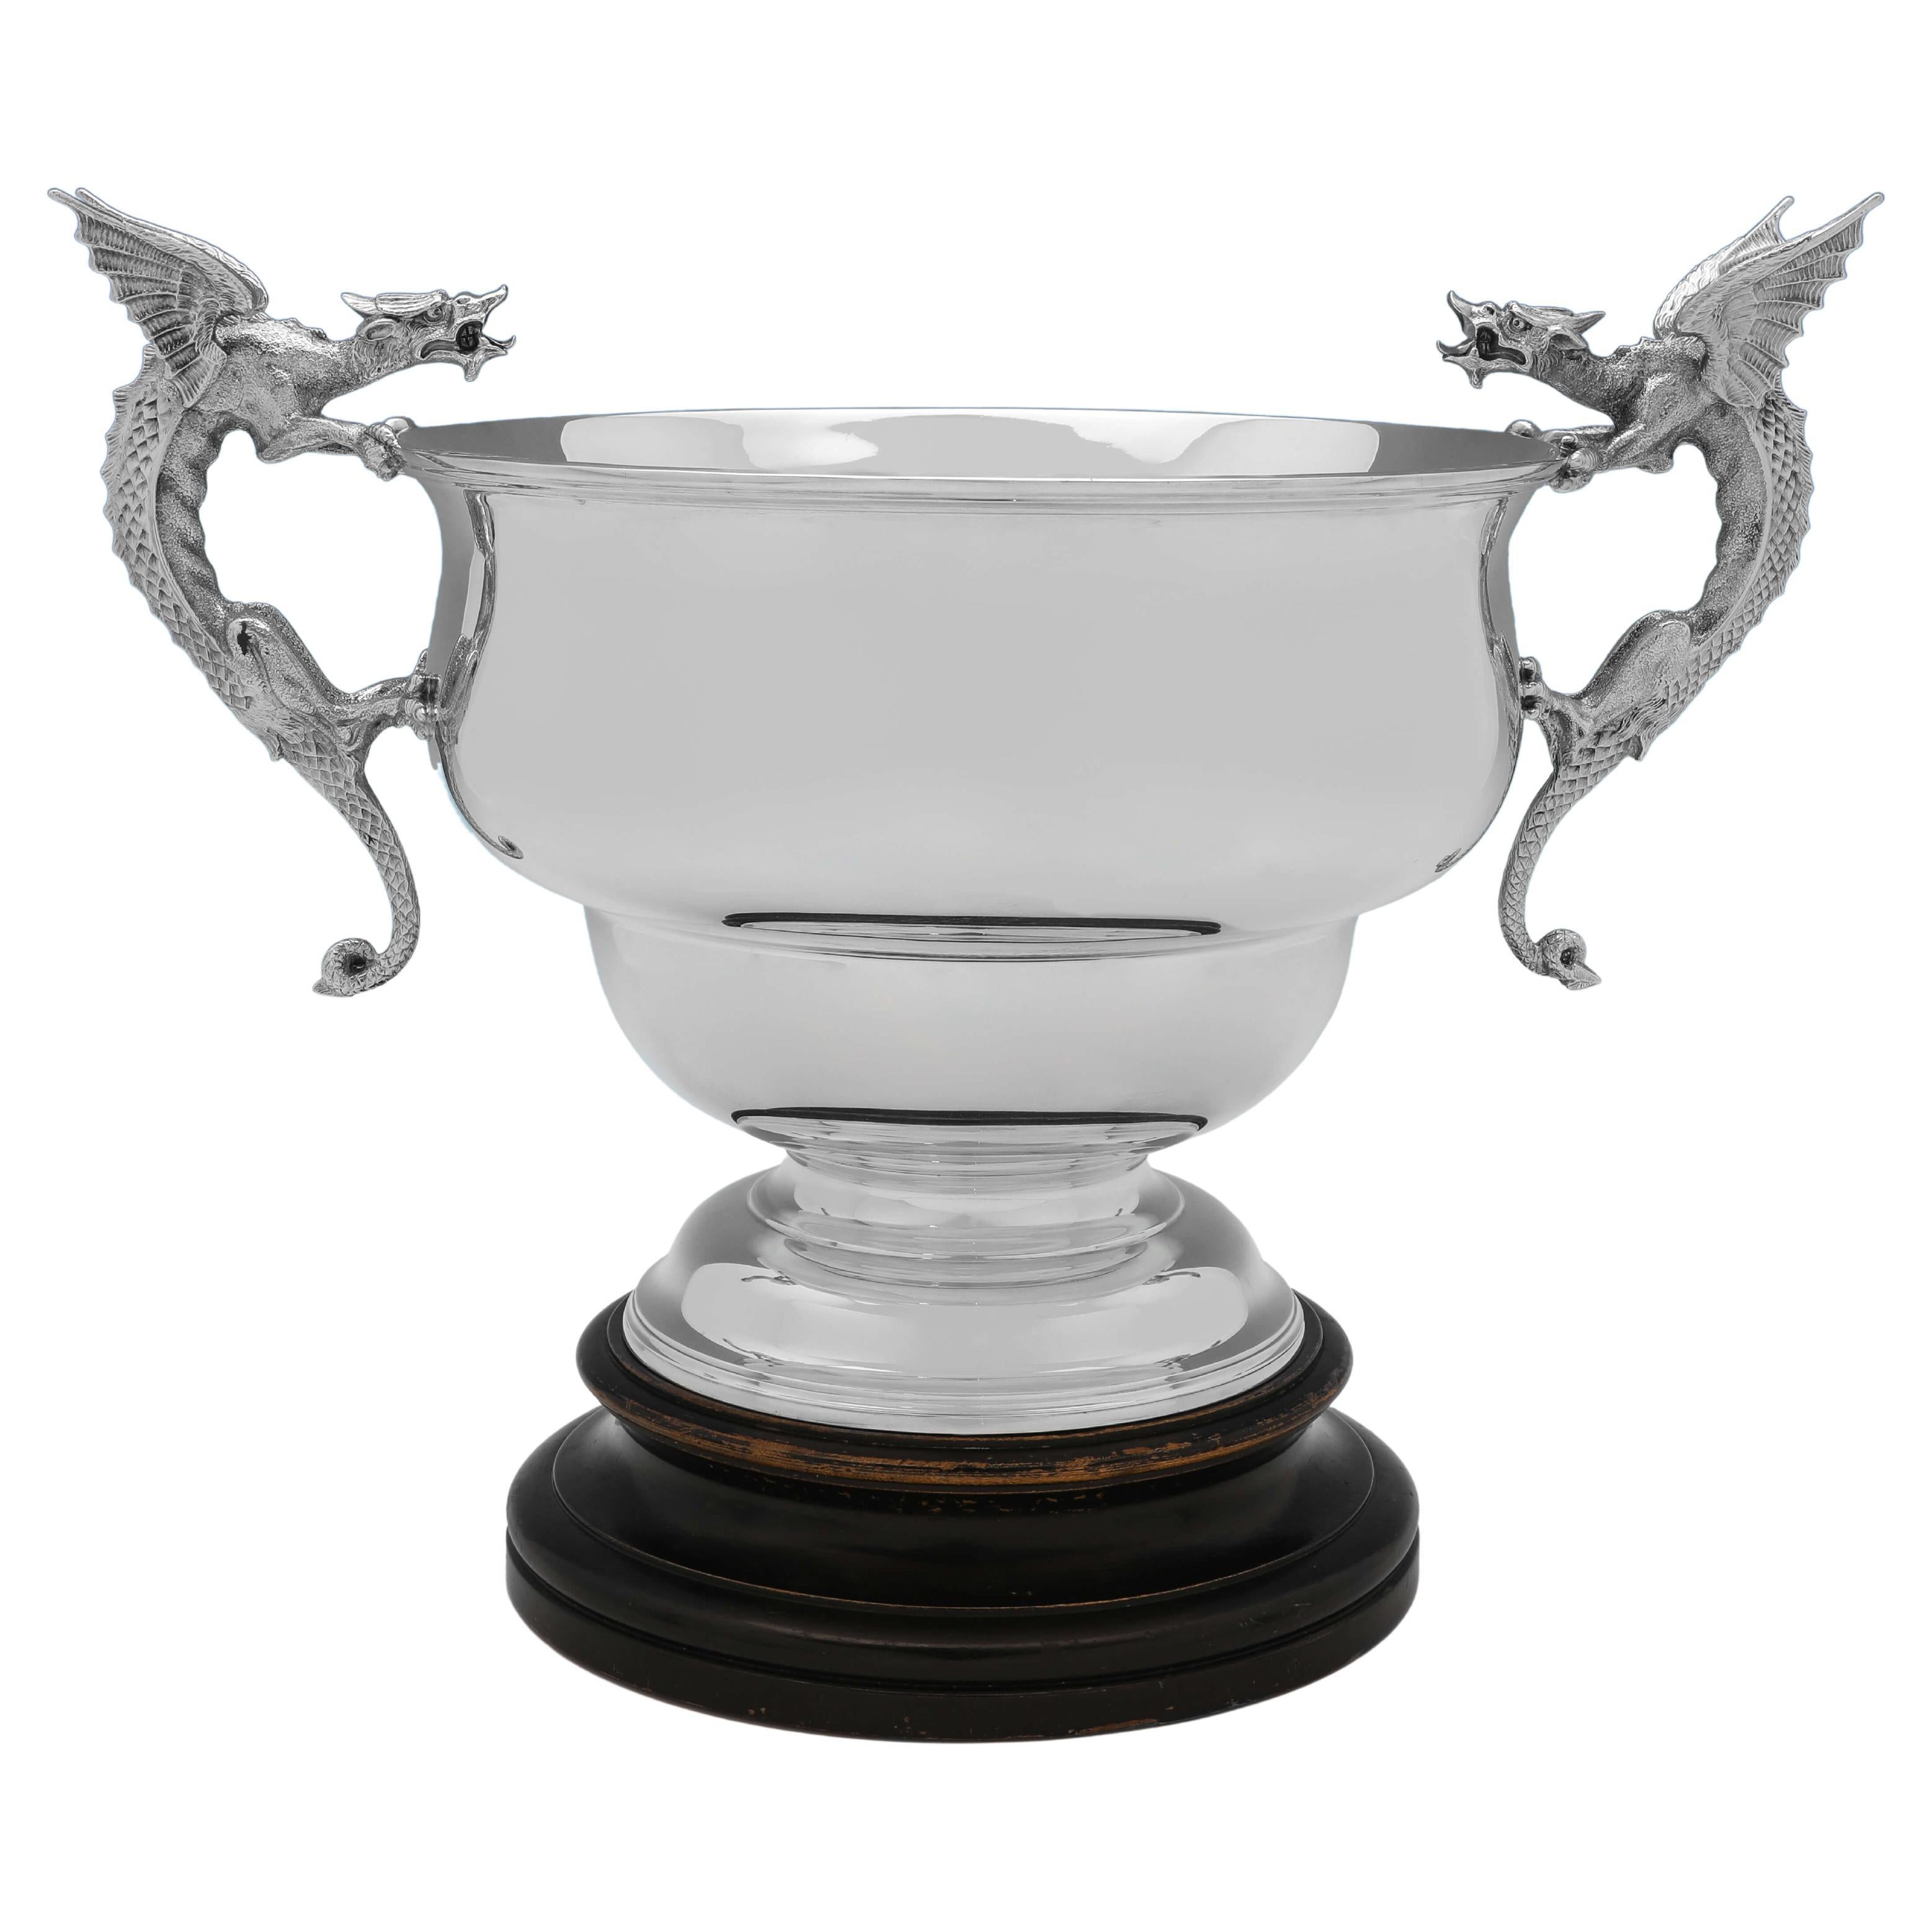 Edwardian Antique Sterling Silver Centrepiece Bowl London 1910, Dragon Handles